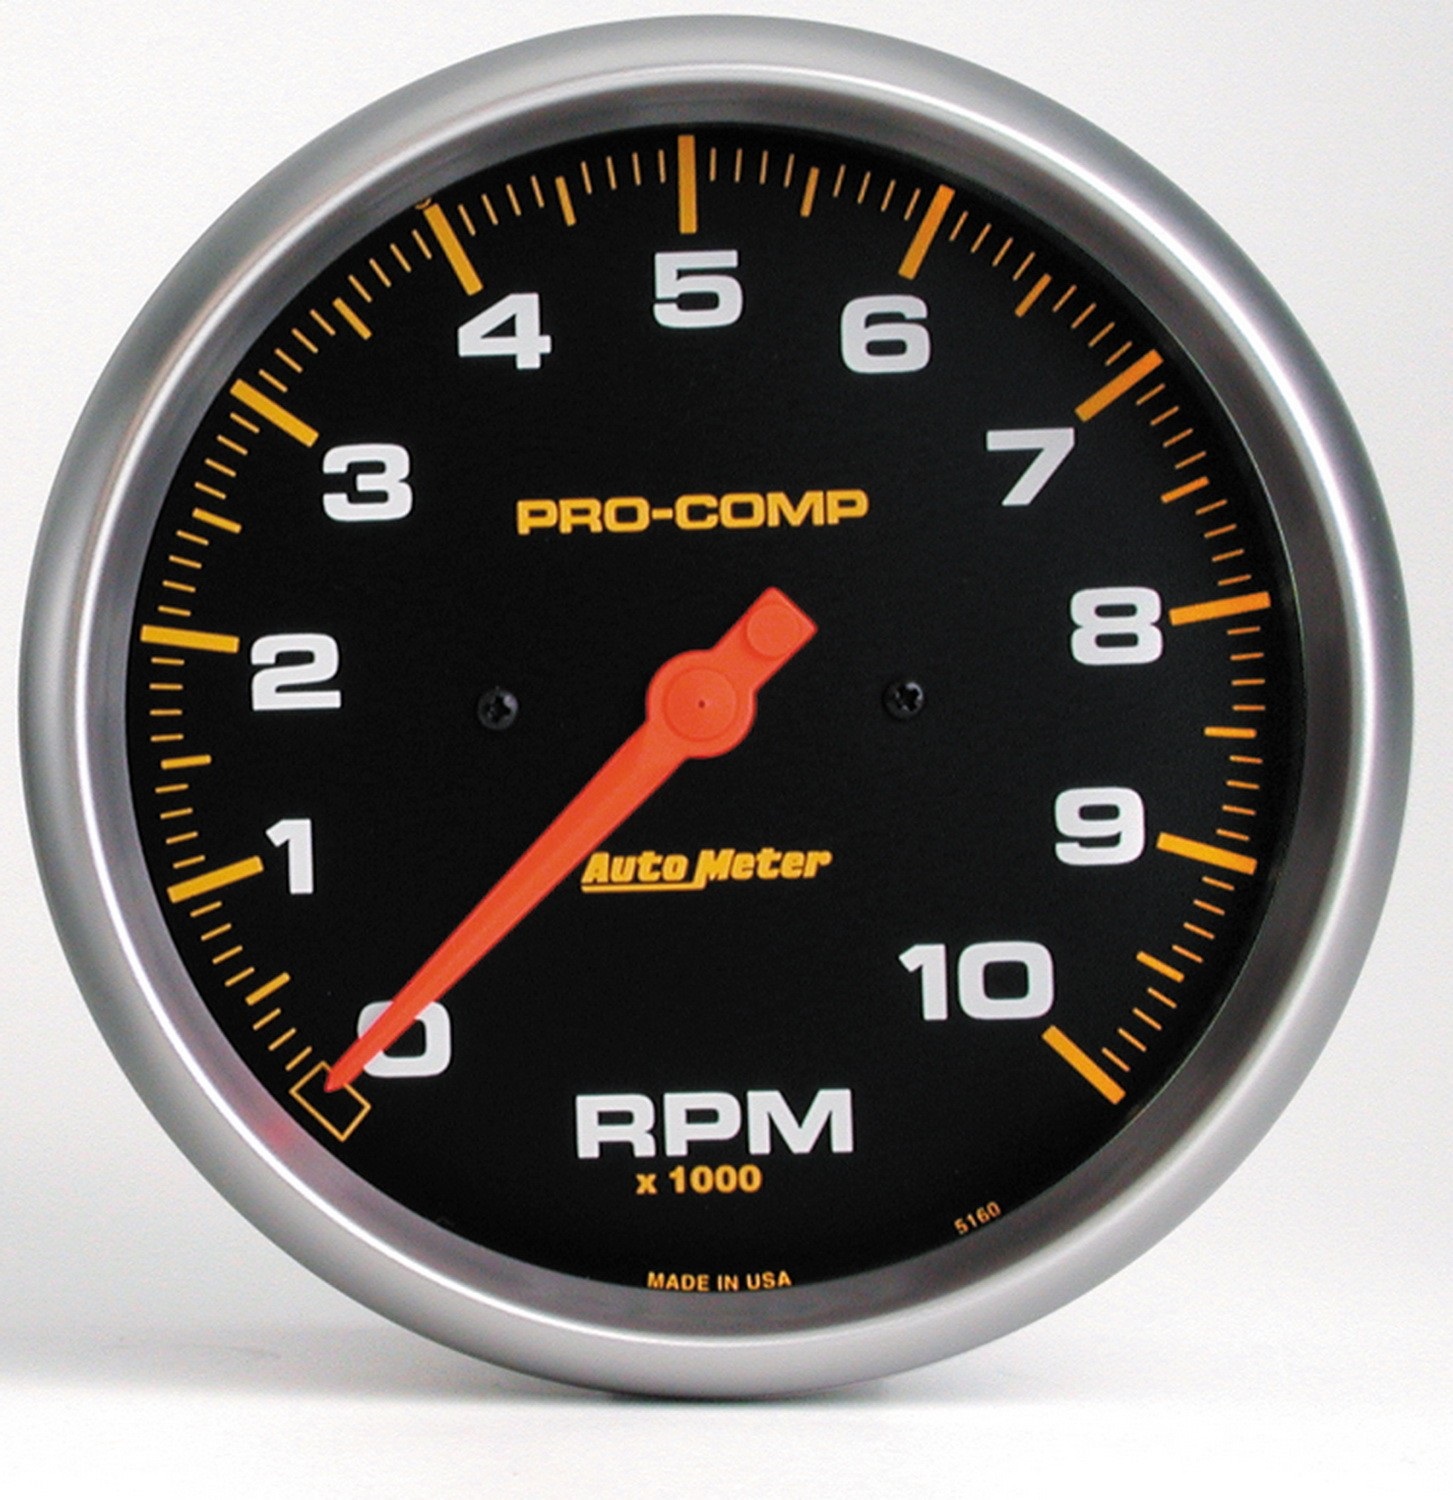 Auto Meter Auto Meter 5160 Pro-Comp; Electric In-Dash Tachometer